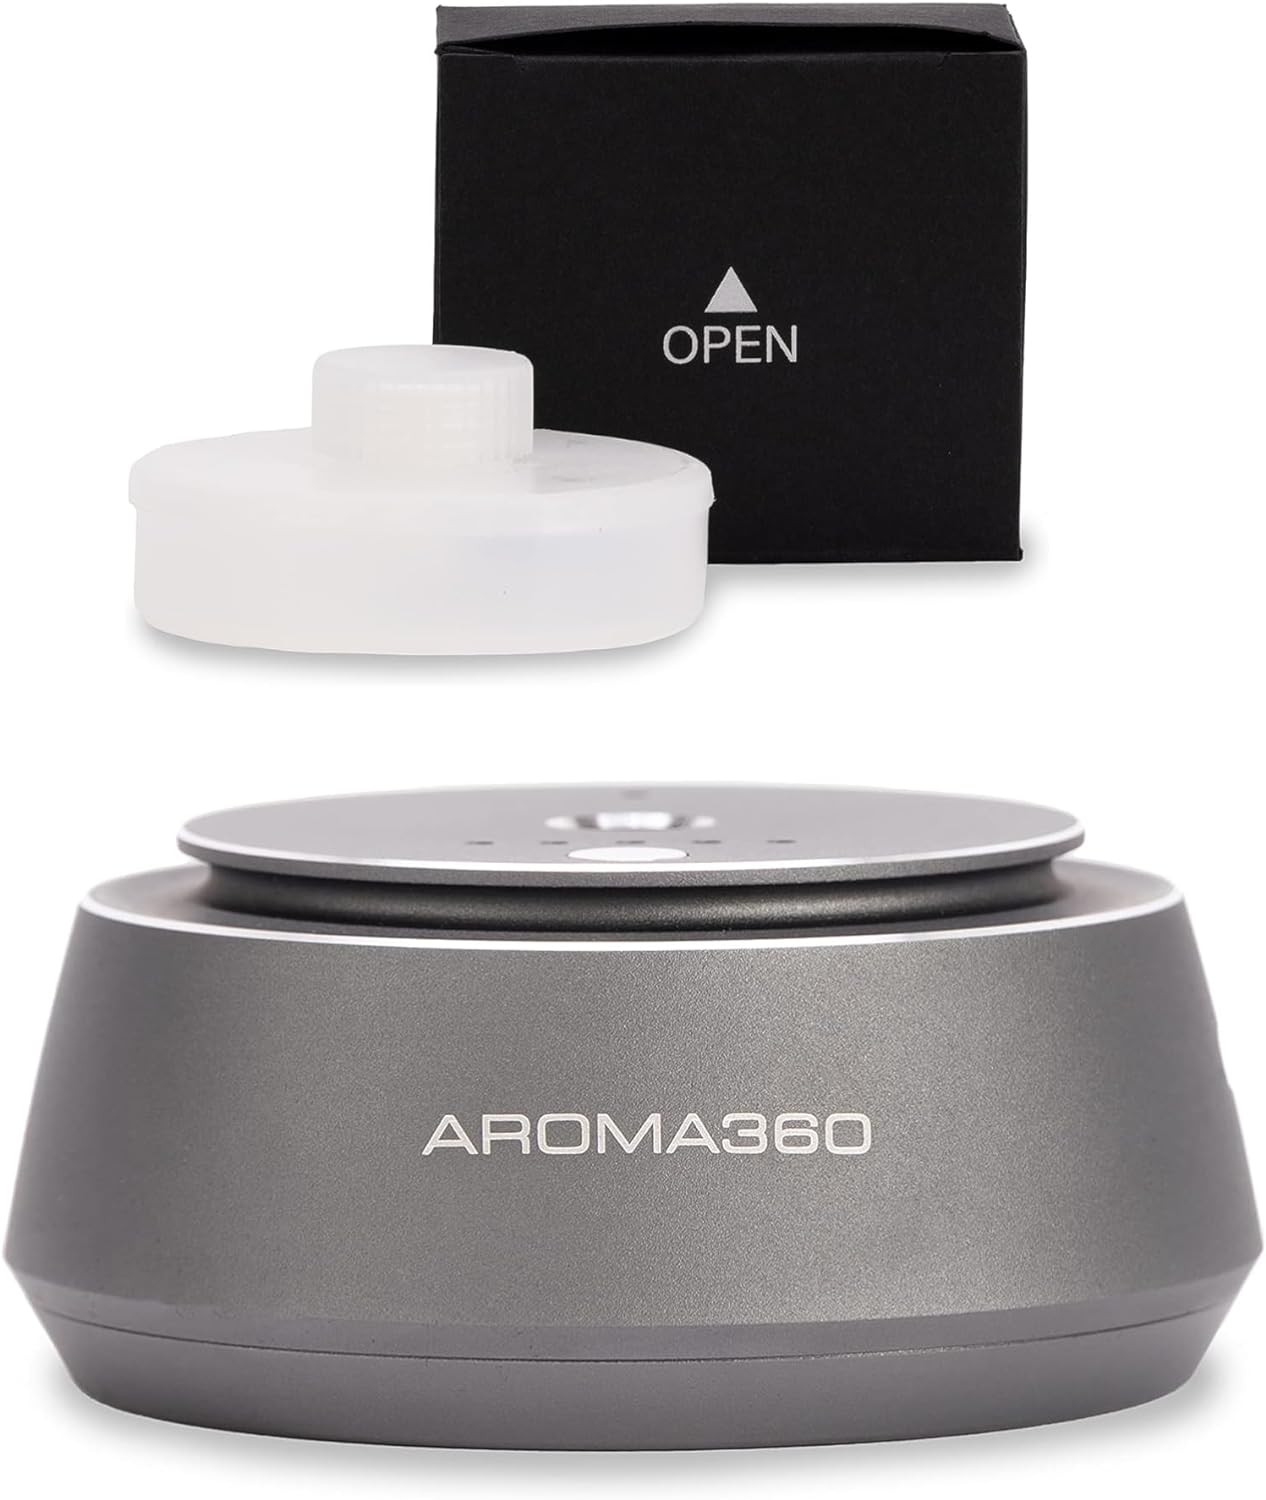 Aroma360 Smart Car Air Freshener Diffuser + Oil